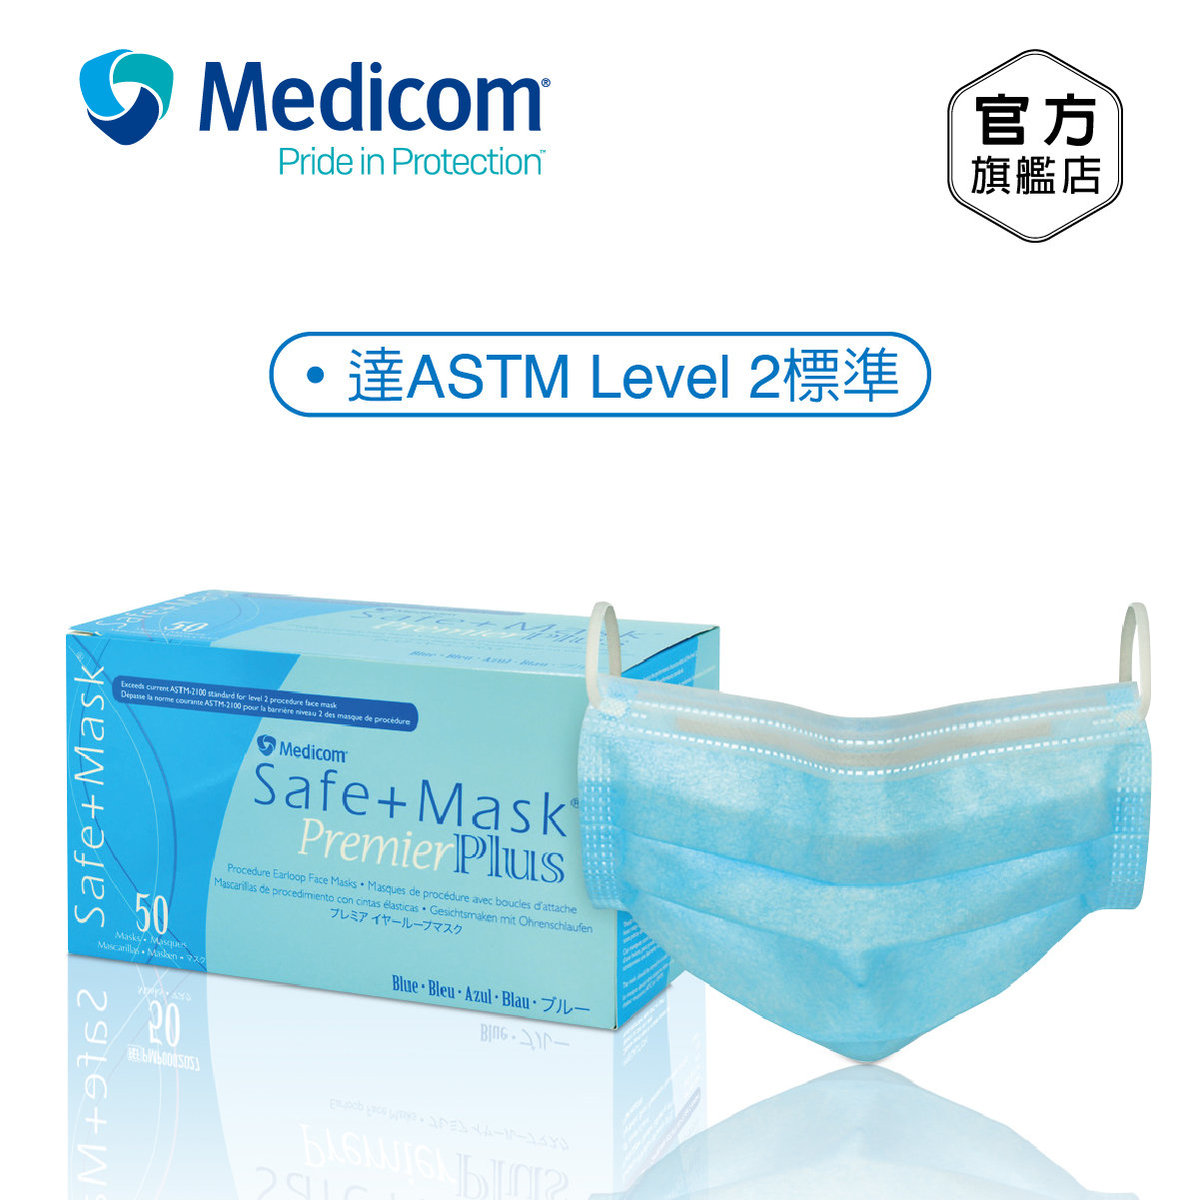 Safe+Mask Premier Plus 醫用成人口罩 Level 2  - 藍色 50片/盒 #PMP0002027